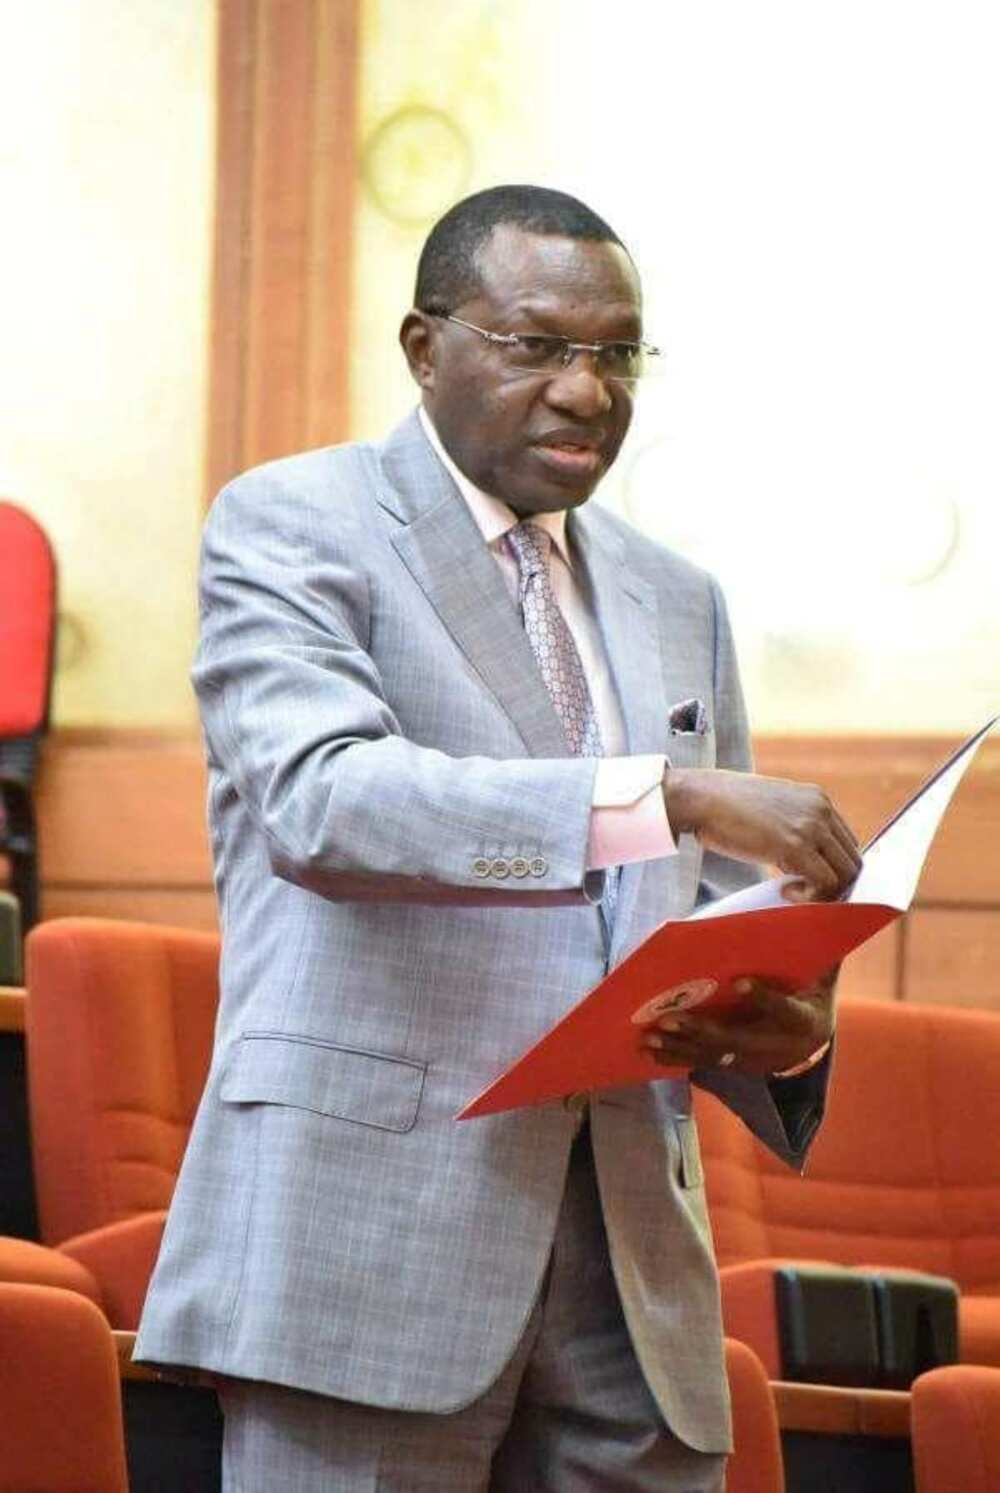 Senator Andy Uba